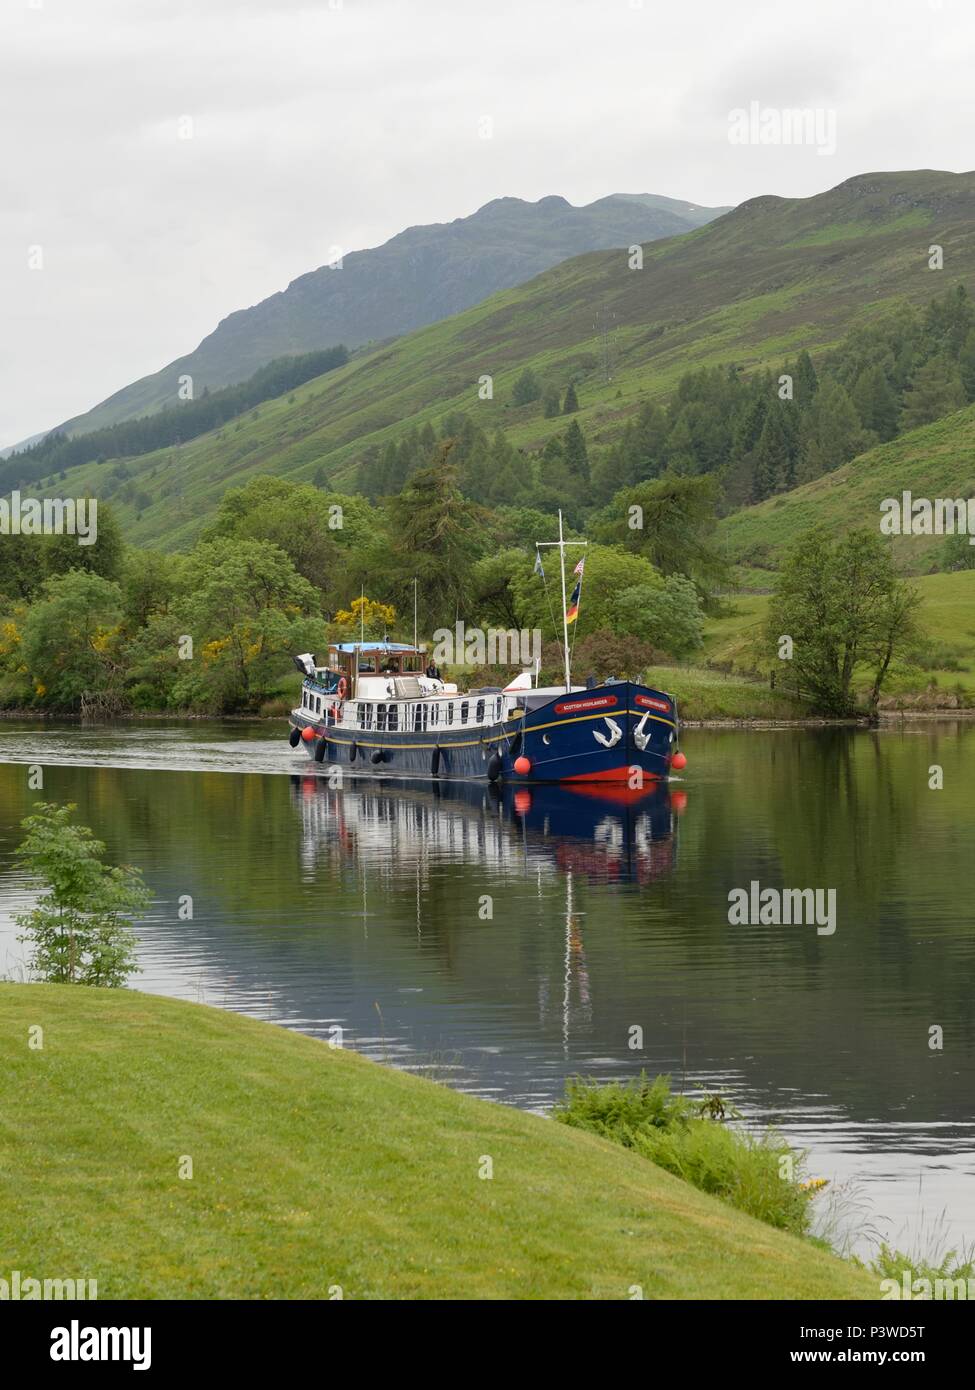 The Hotel Barge Scottish Highlander passing through Laggan on the Caledonian Canal in Highland, Scotland, UK Stock Photo